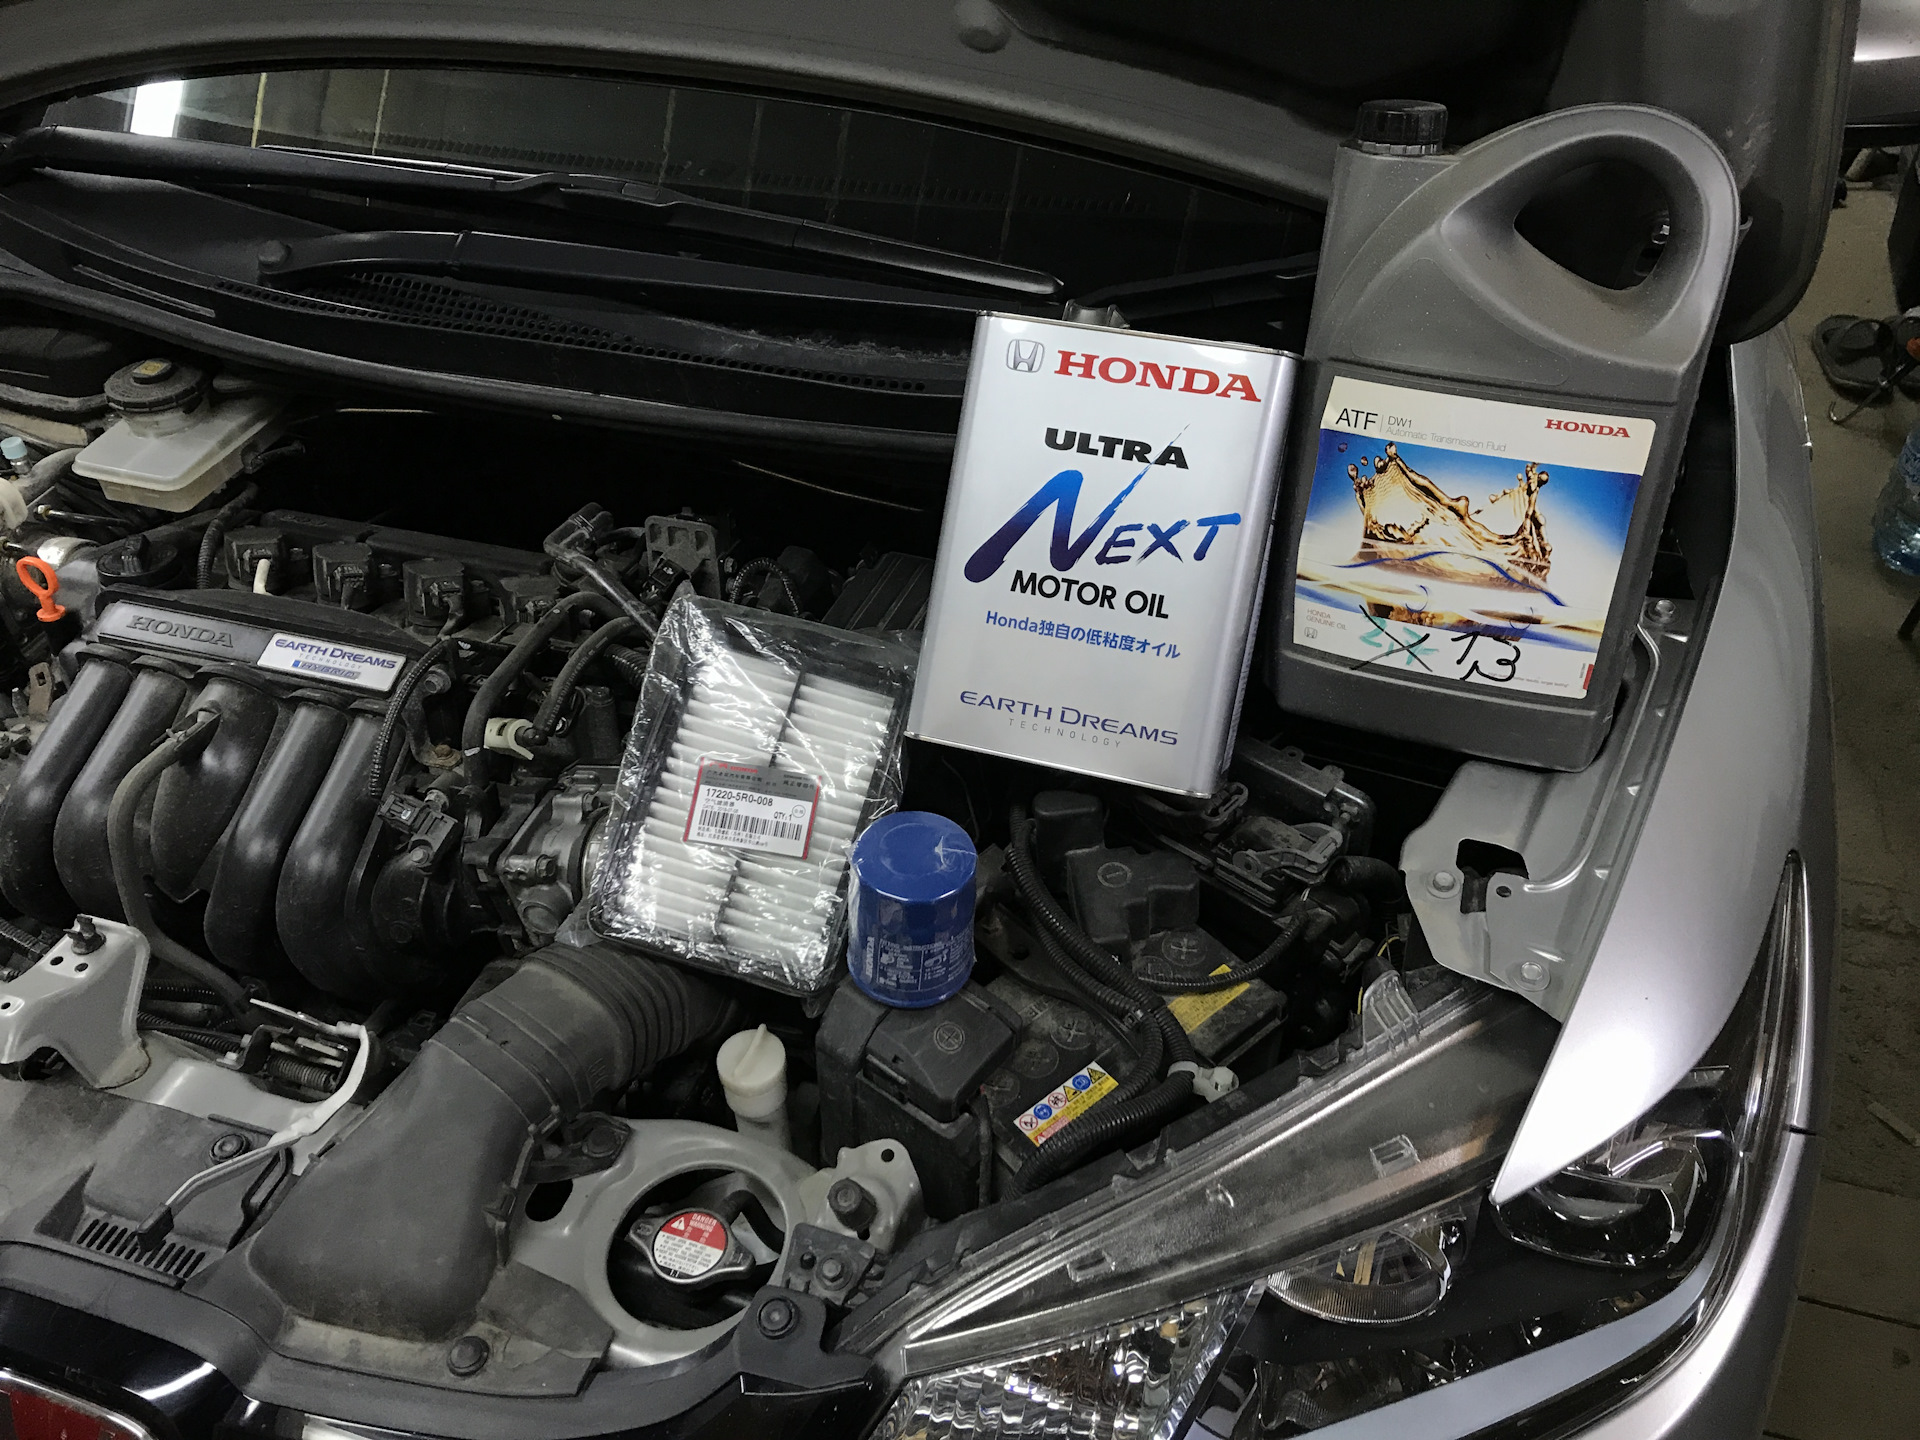 Honda fit какое масло. Honda Fit Hybrid 2011 Battery. Honda Fit гибрид масло. Масло моторное для Хонда фит 1,5 гибрид. Фильтр масляный Honda Fit gp5.